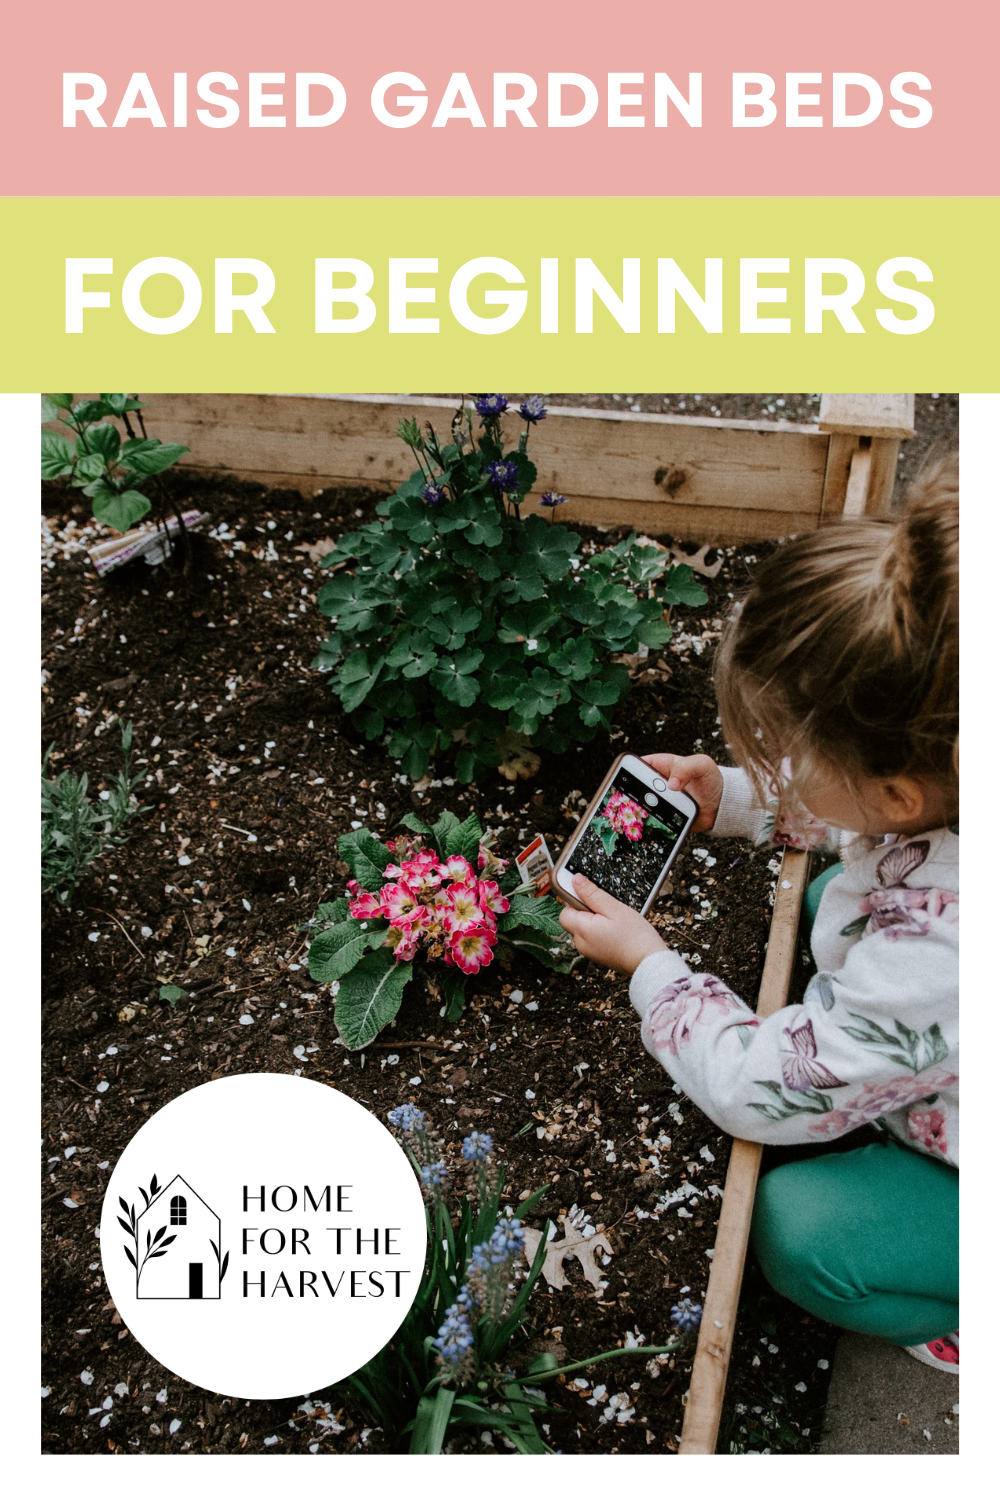 Raised garden beds for beginners via @home4theharvest